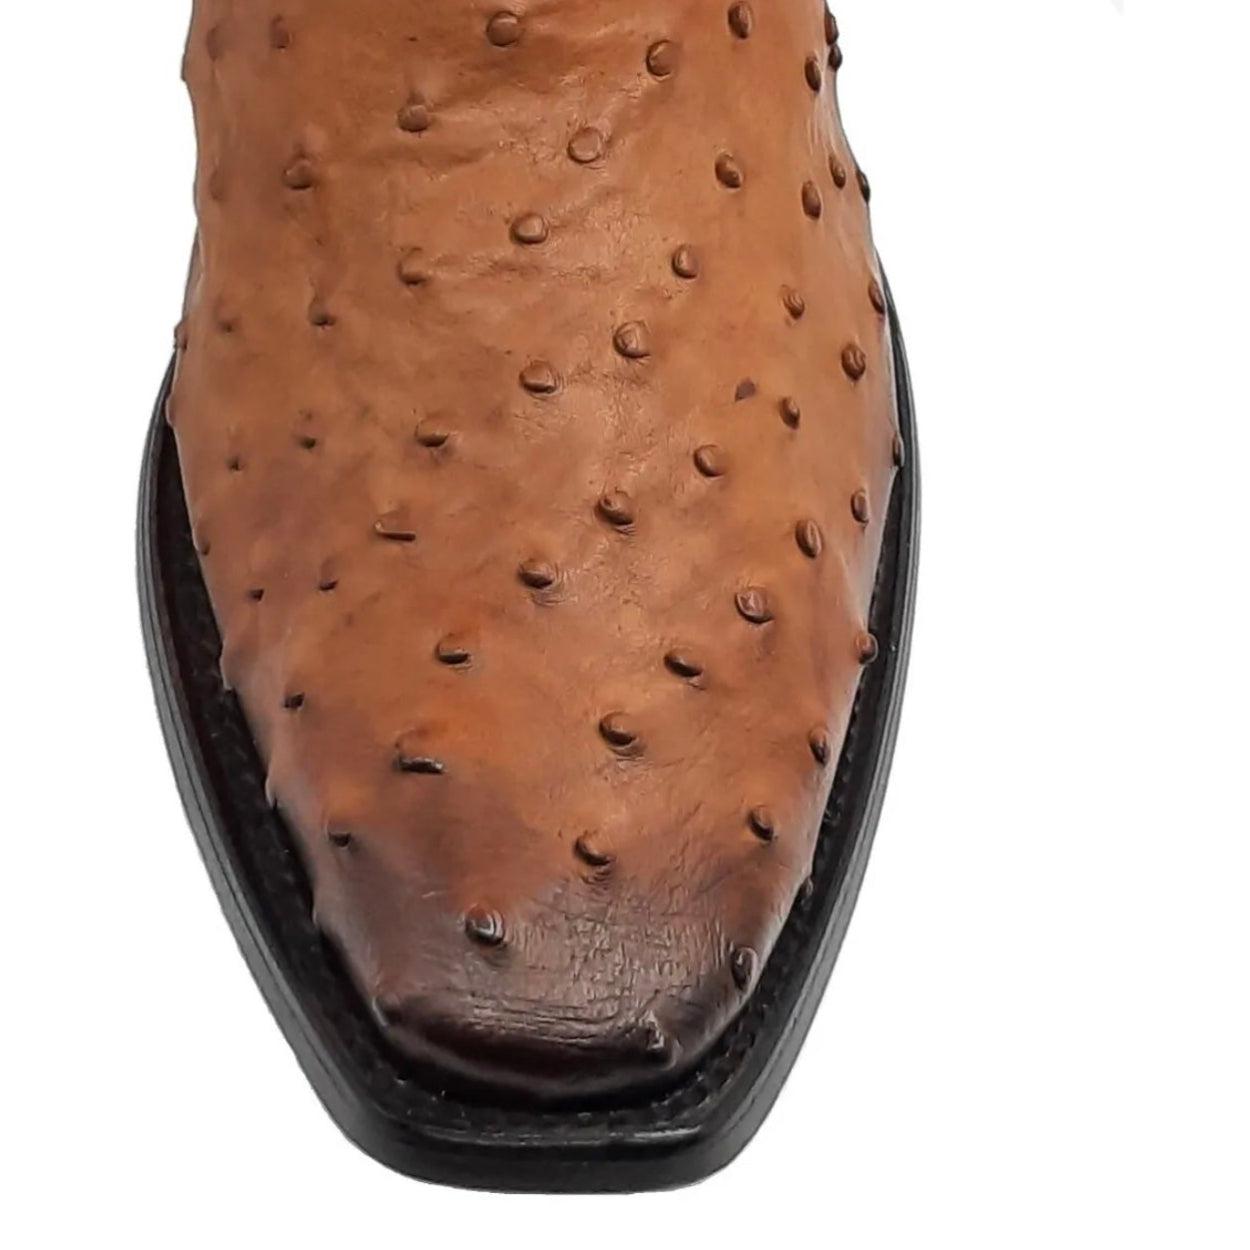 3C1NA1 - Cuadra brandy dress cowboy exotic ostrich leather boots for men-CUADRA-Kuet-Cuadra-Boots